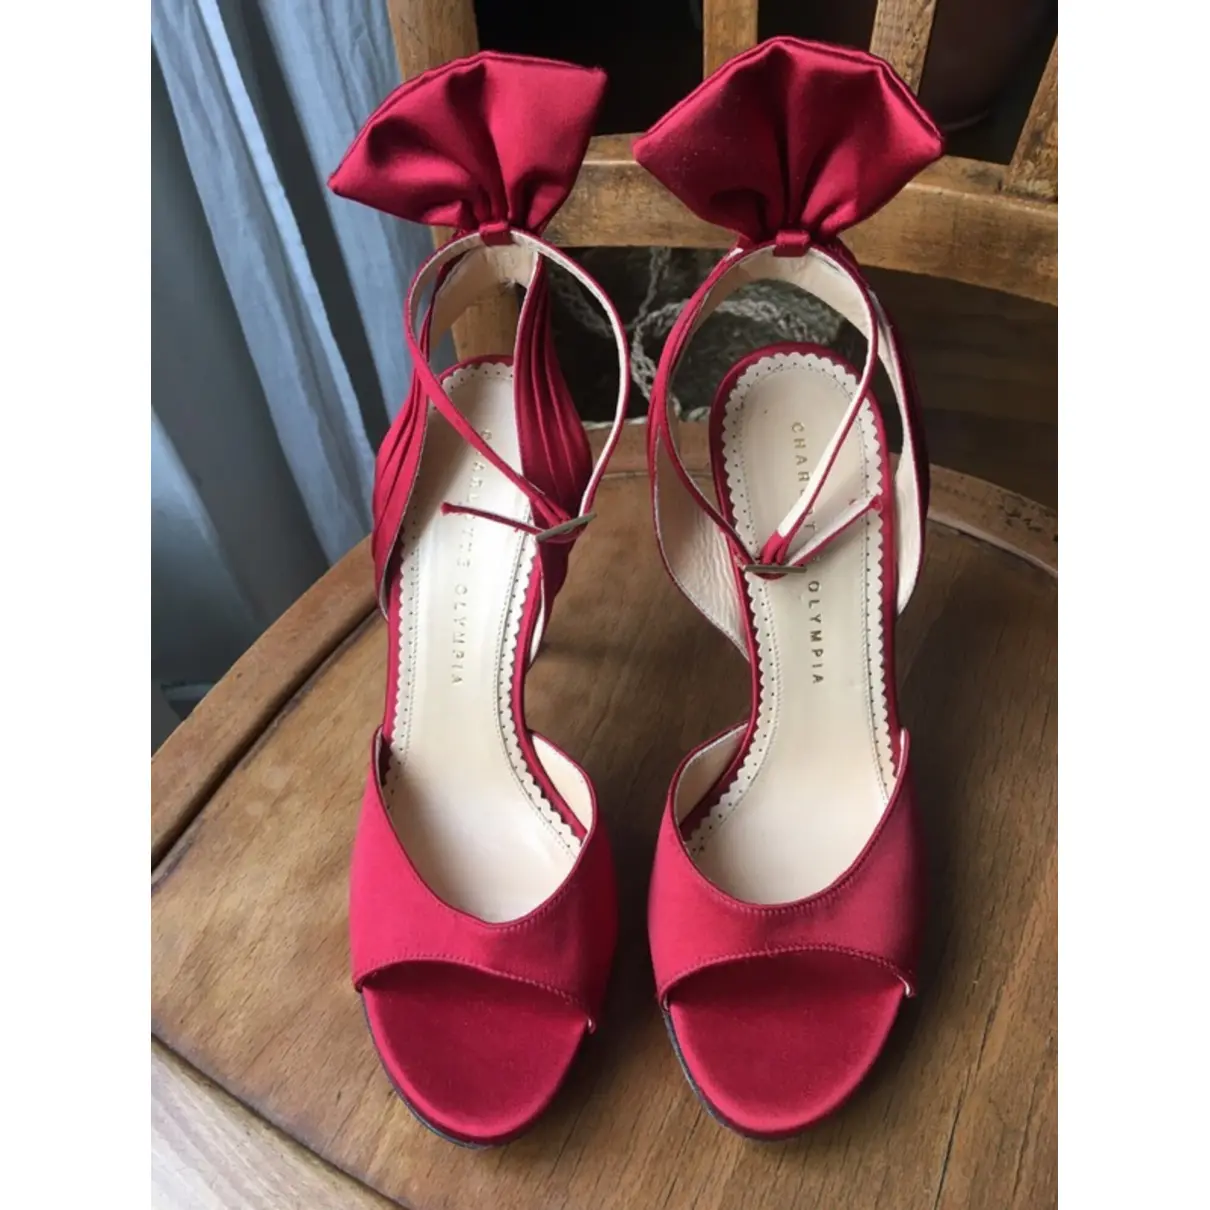 Buy Charlotte Olympia Cloth sandal online